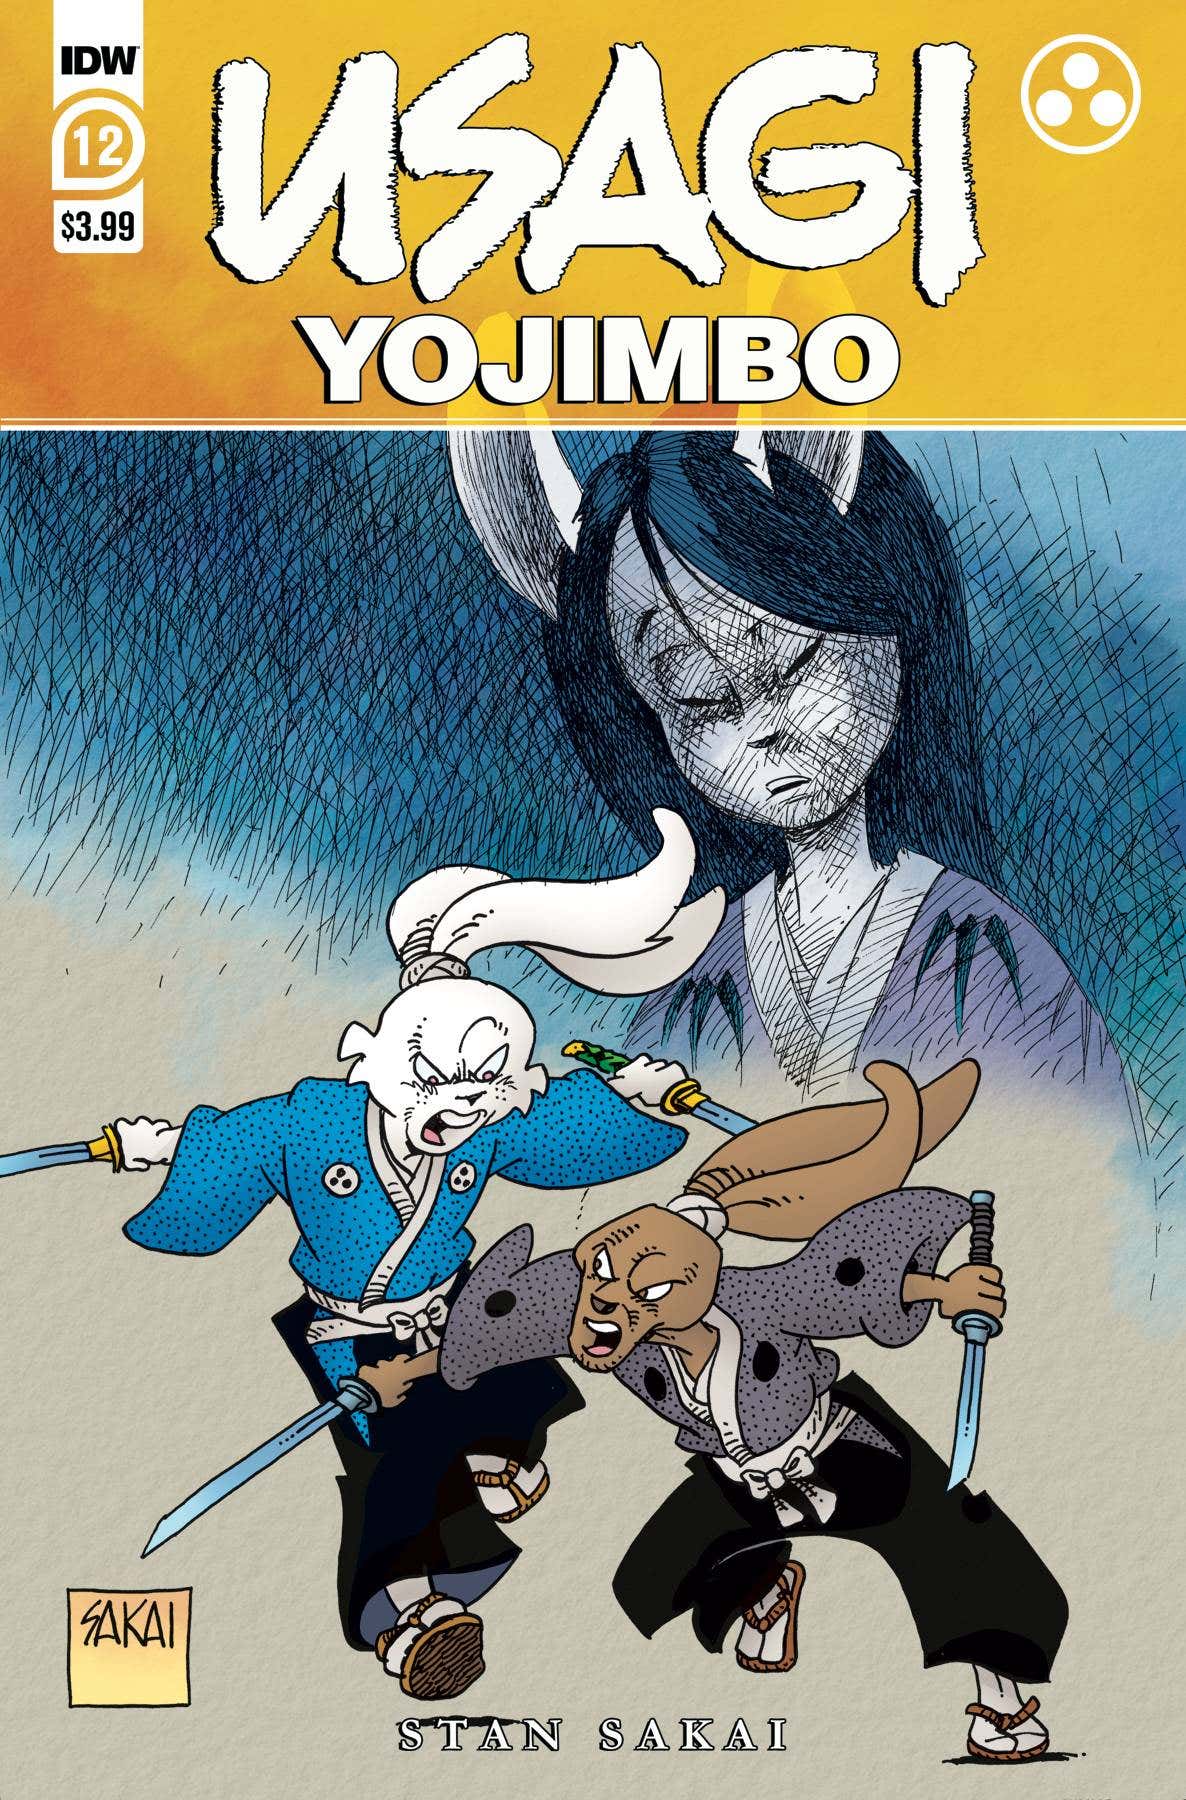 usagi yojimbo wiki